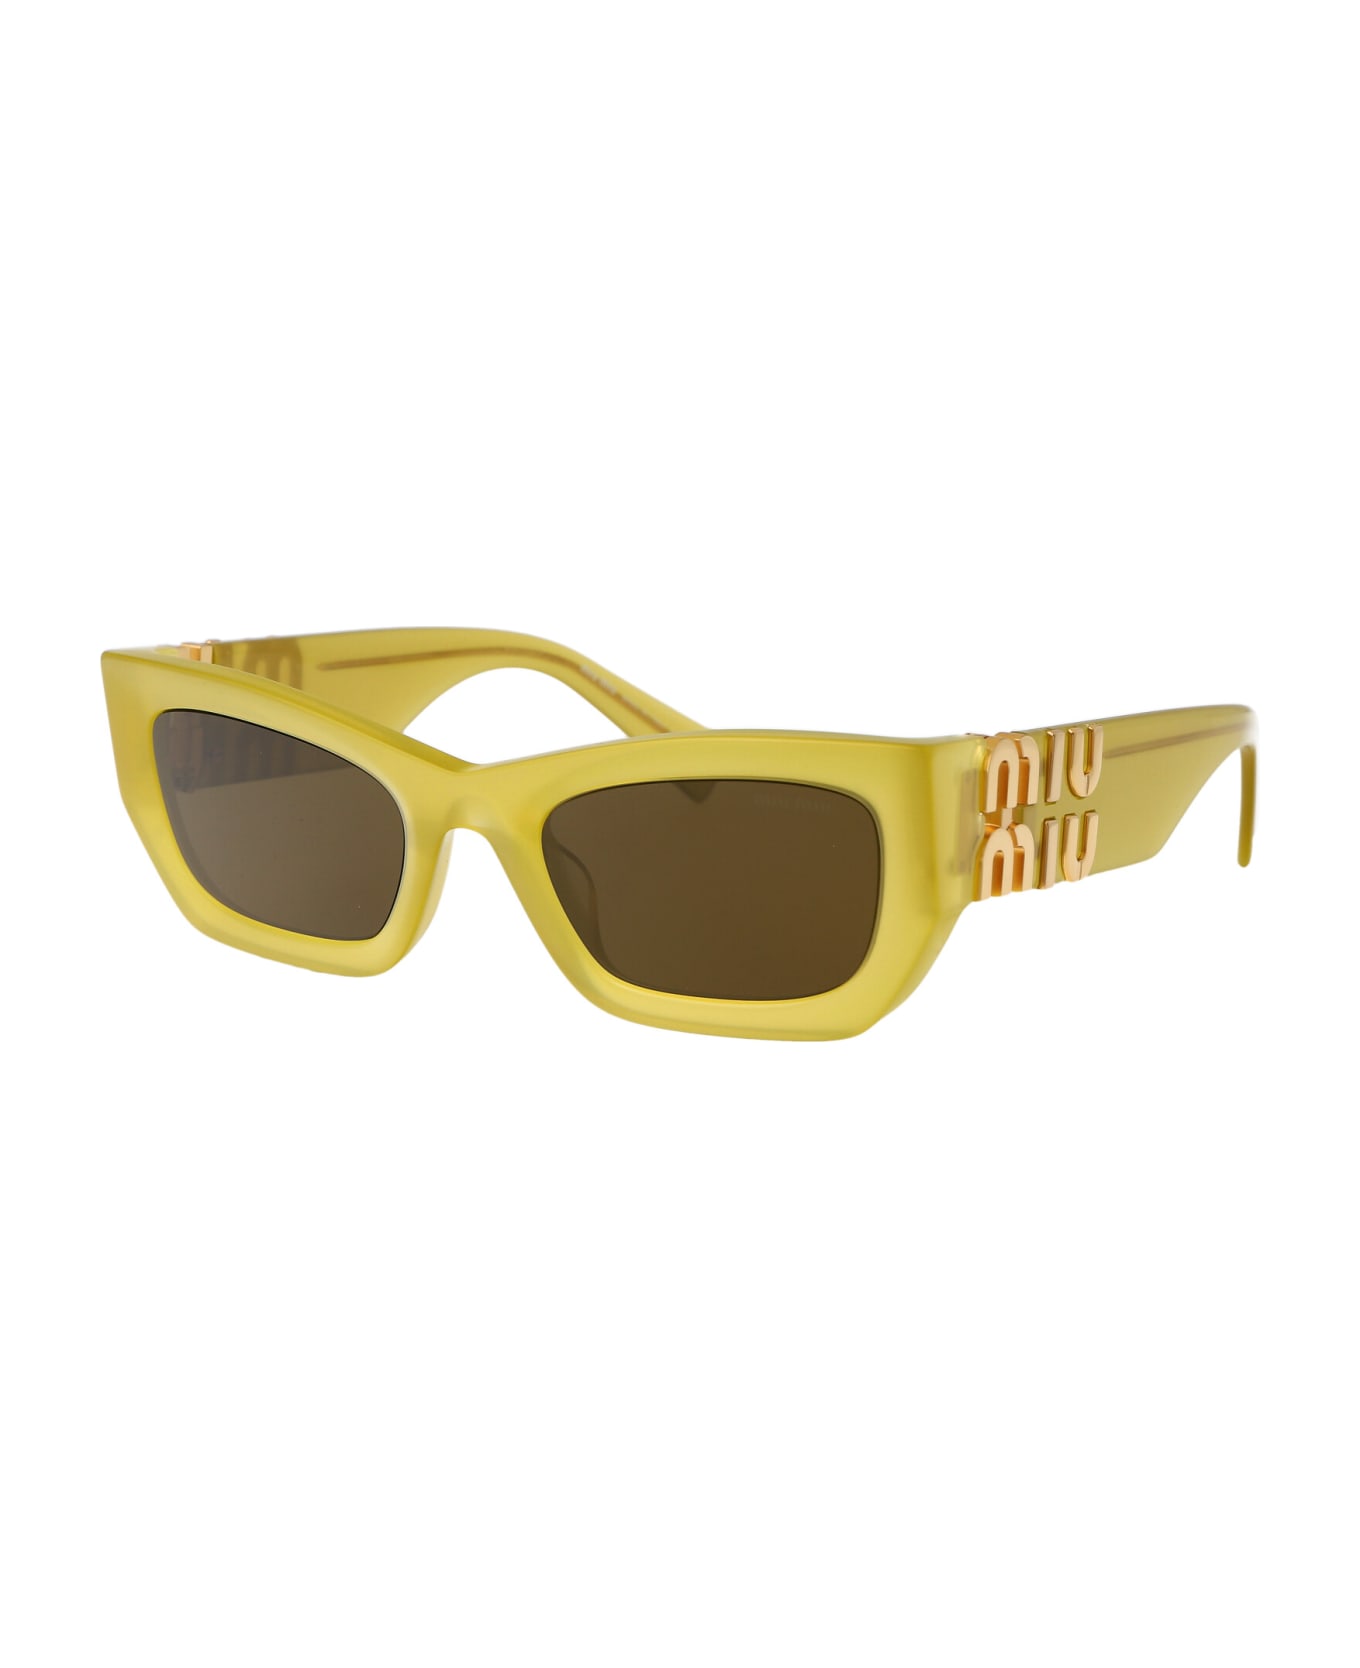 Miu Miu Eyewear 0mu 09ws Sunglasses - 17L01T Ananas Opal